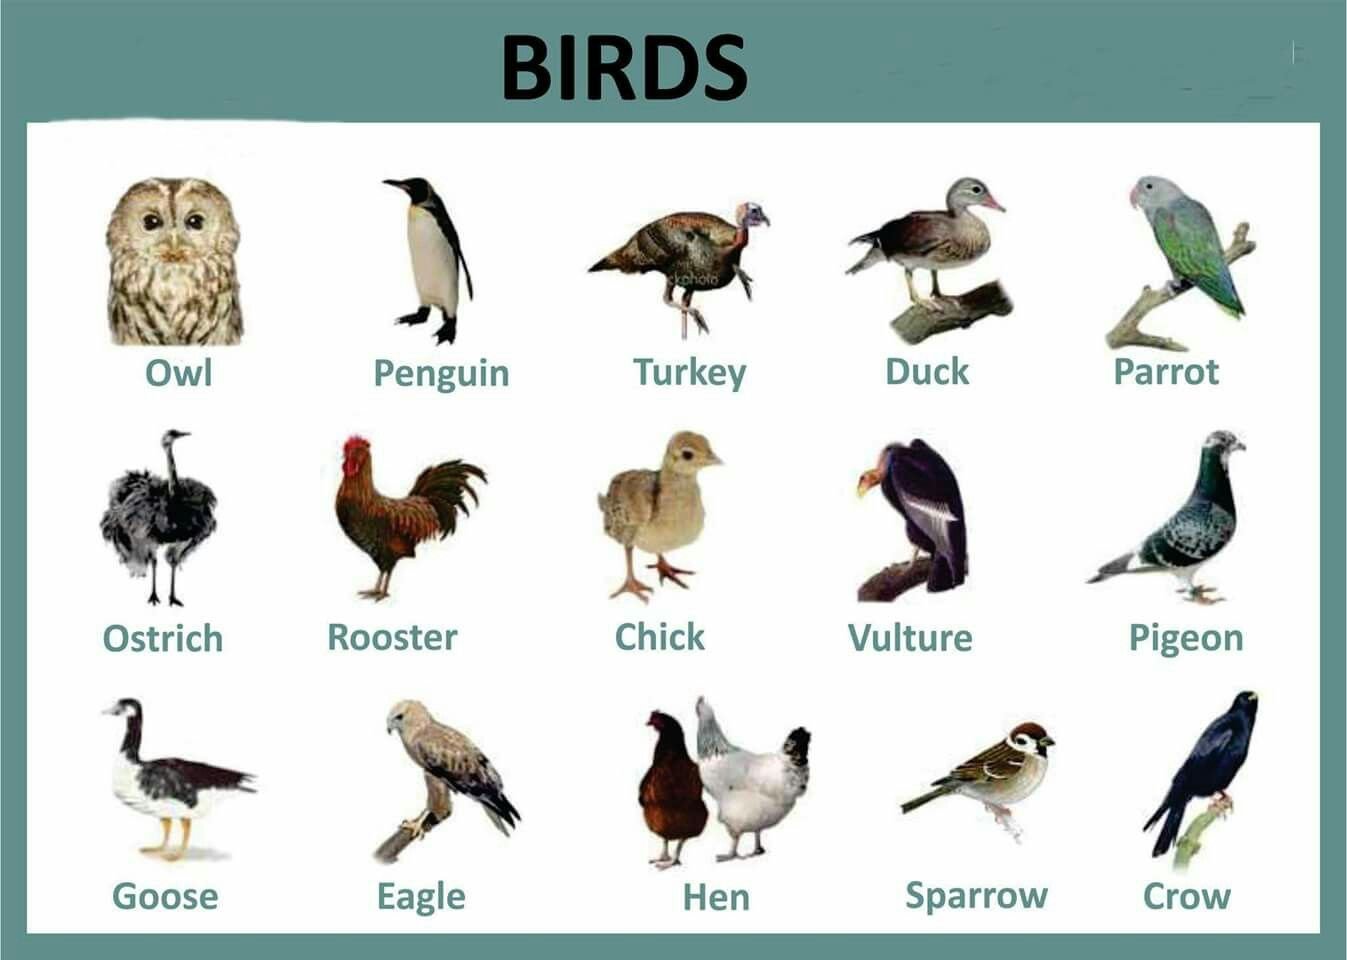 Перевести птиц на английский. Птицы на английском. Виды птиц на английском языке. Название птиц. Названия птиц на англ.